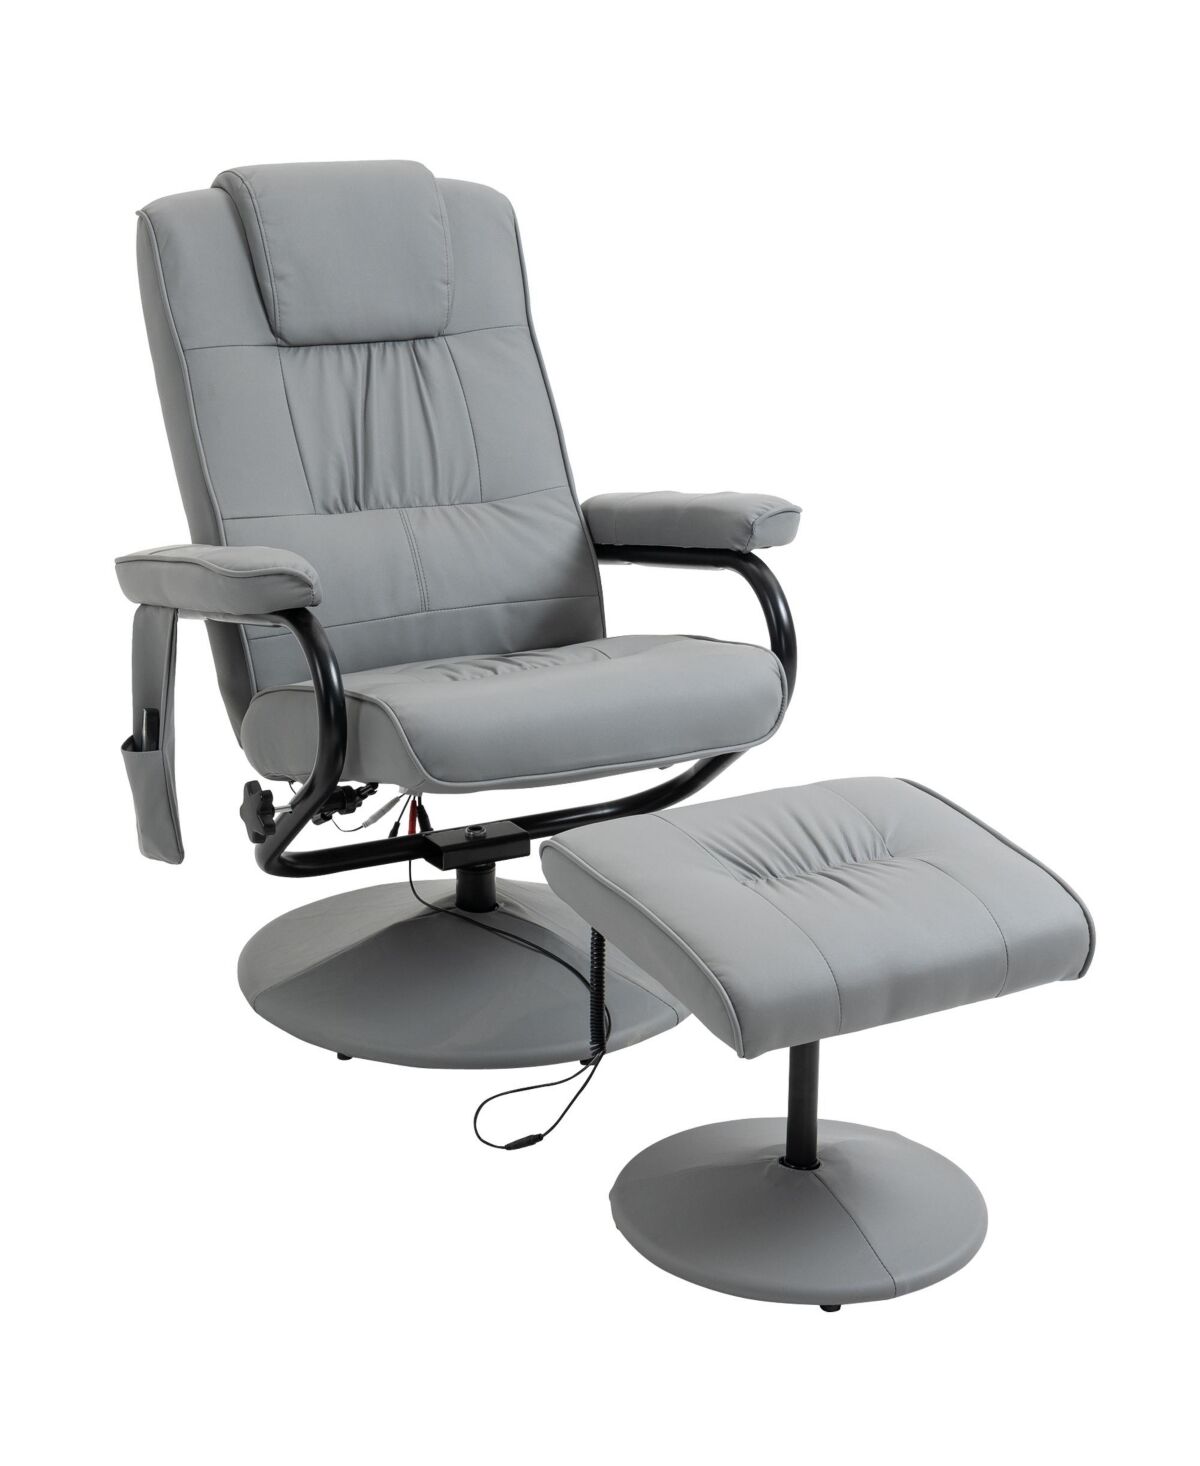 Homcom Vibration Massage Recliner Chair with Ottoman, Gray - Gray